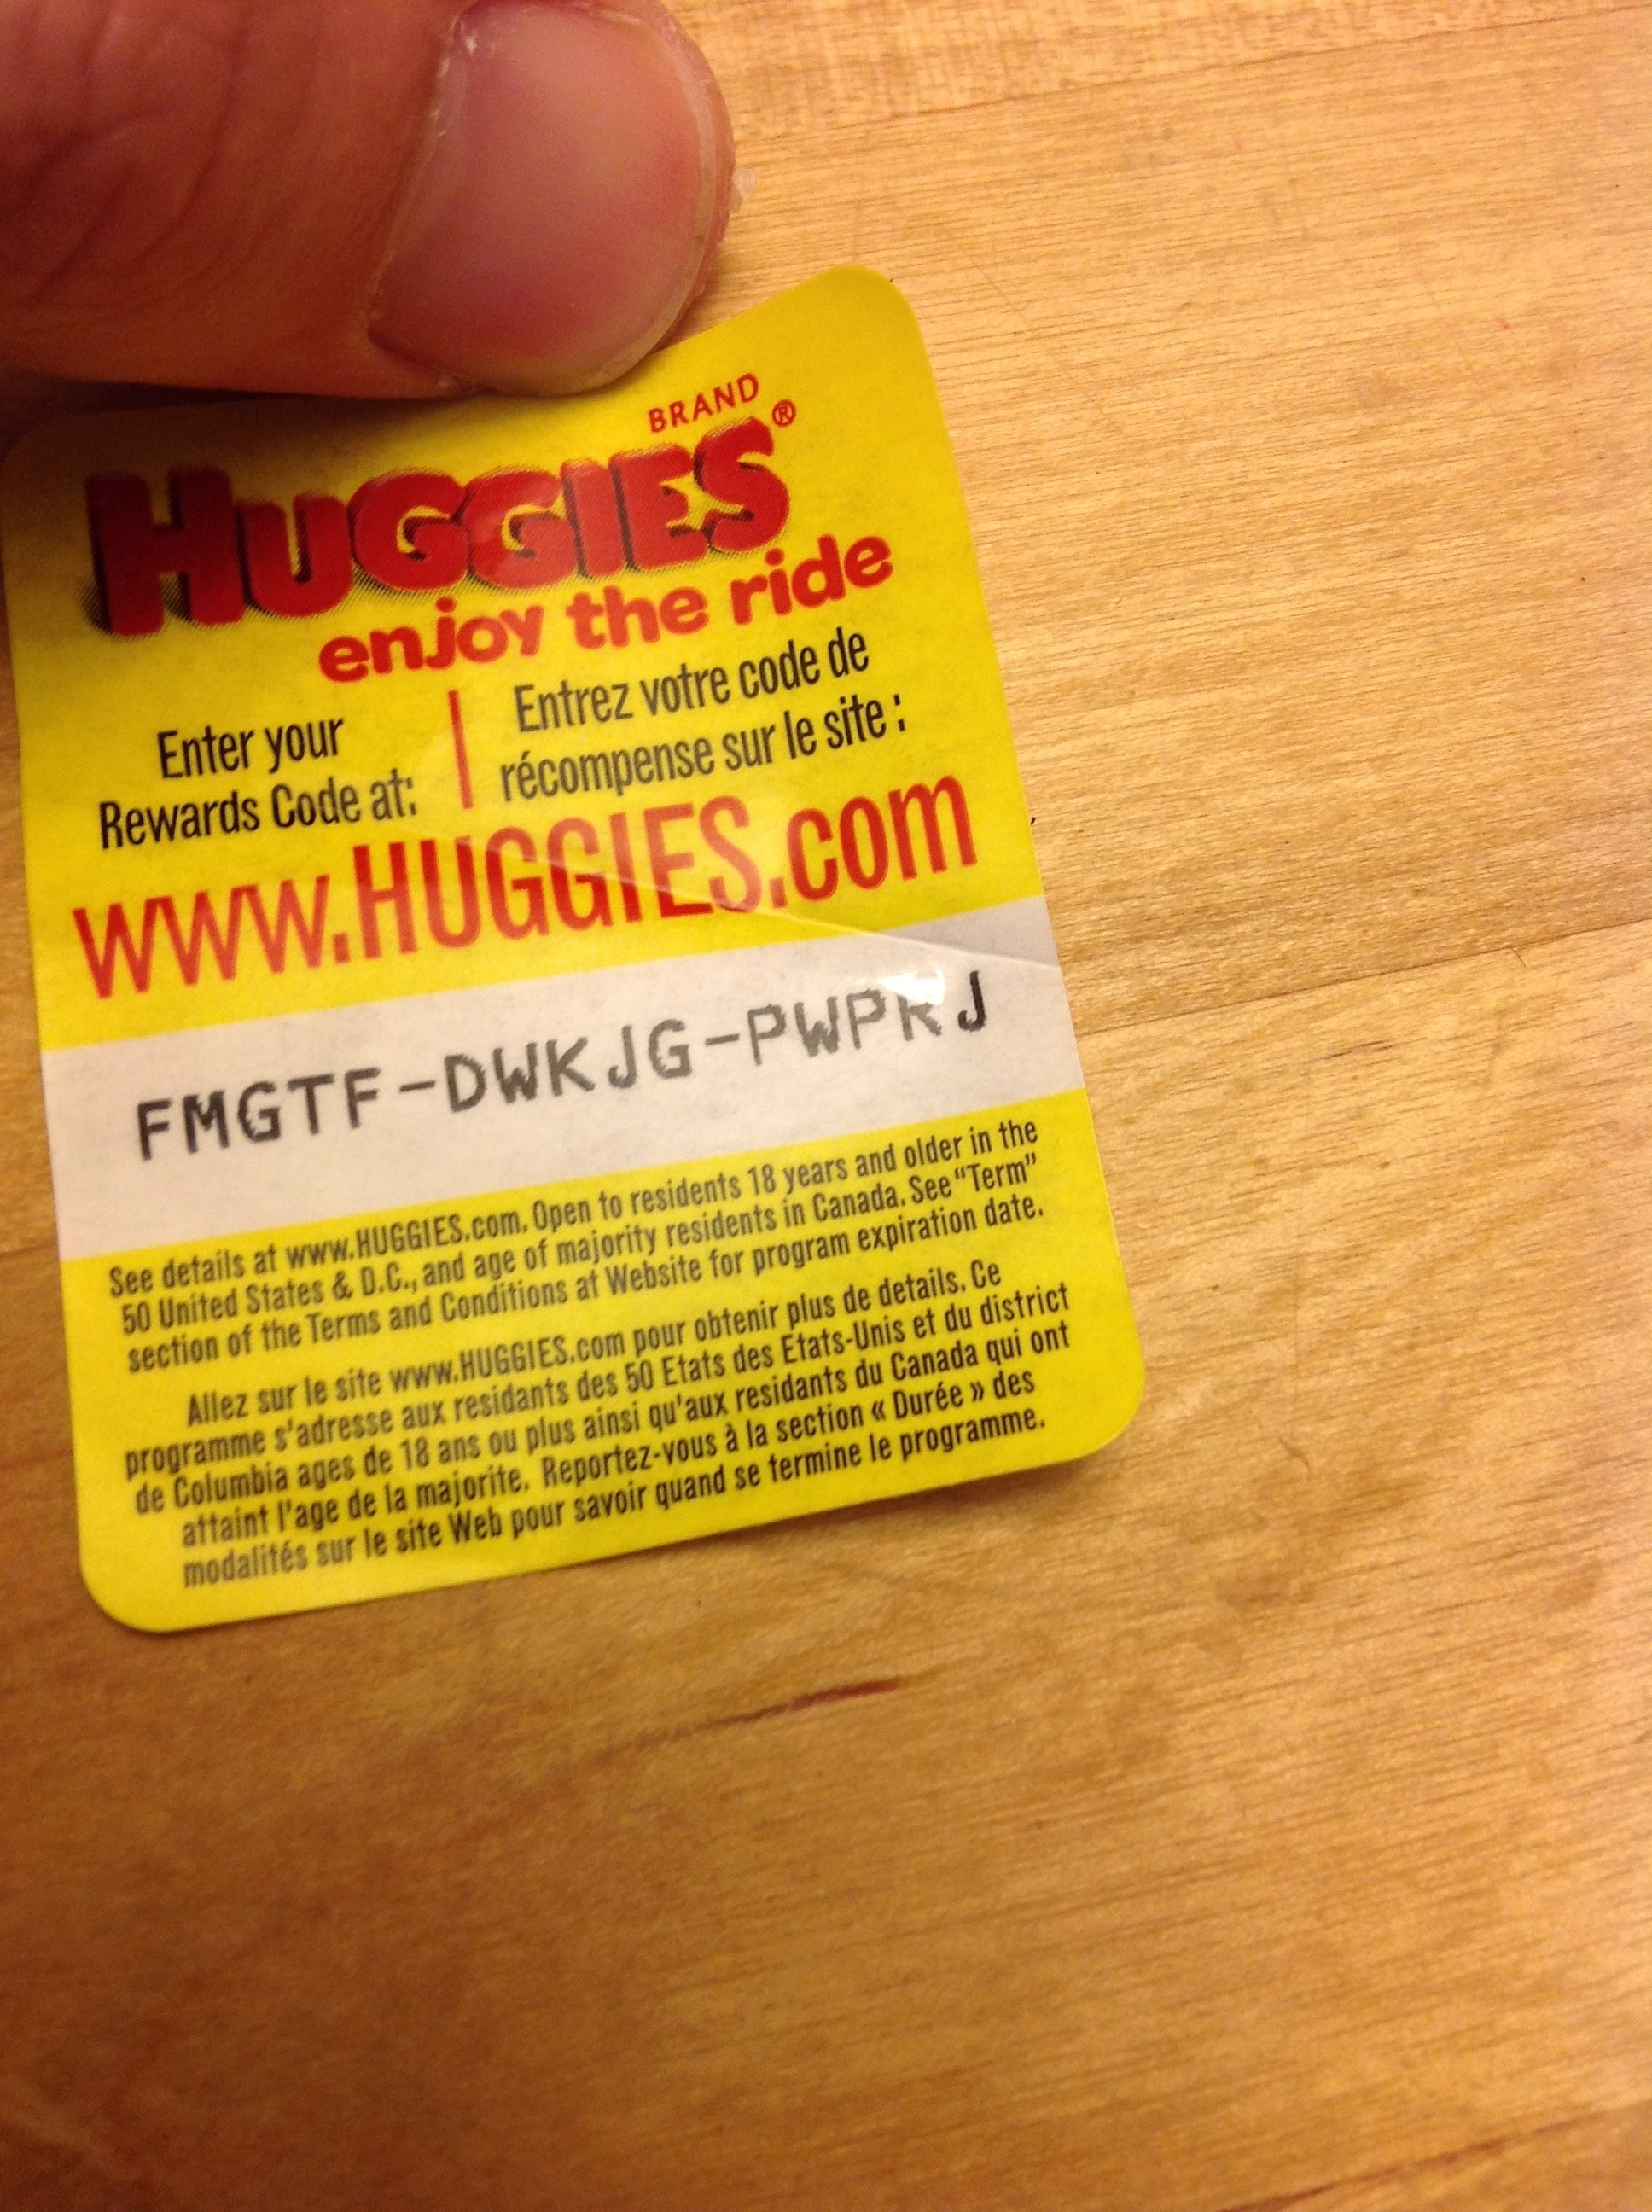 Free Huggies Rewards Codes September 2012